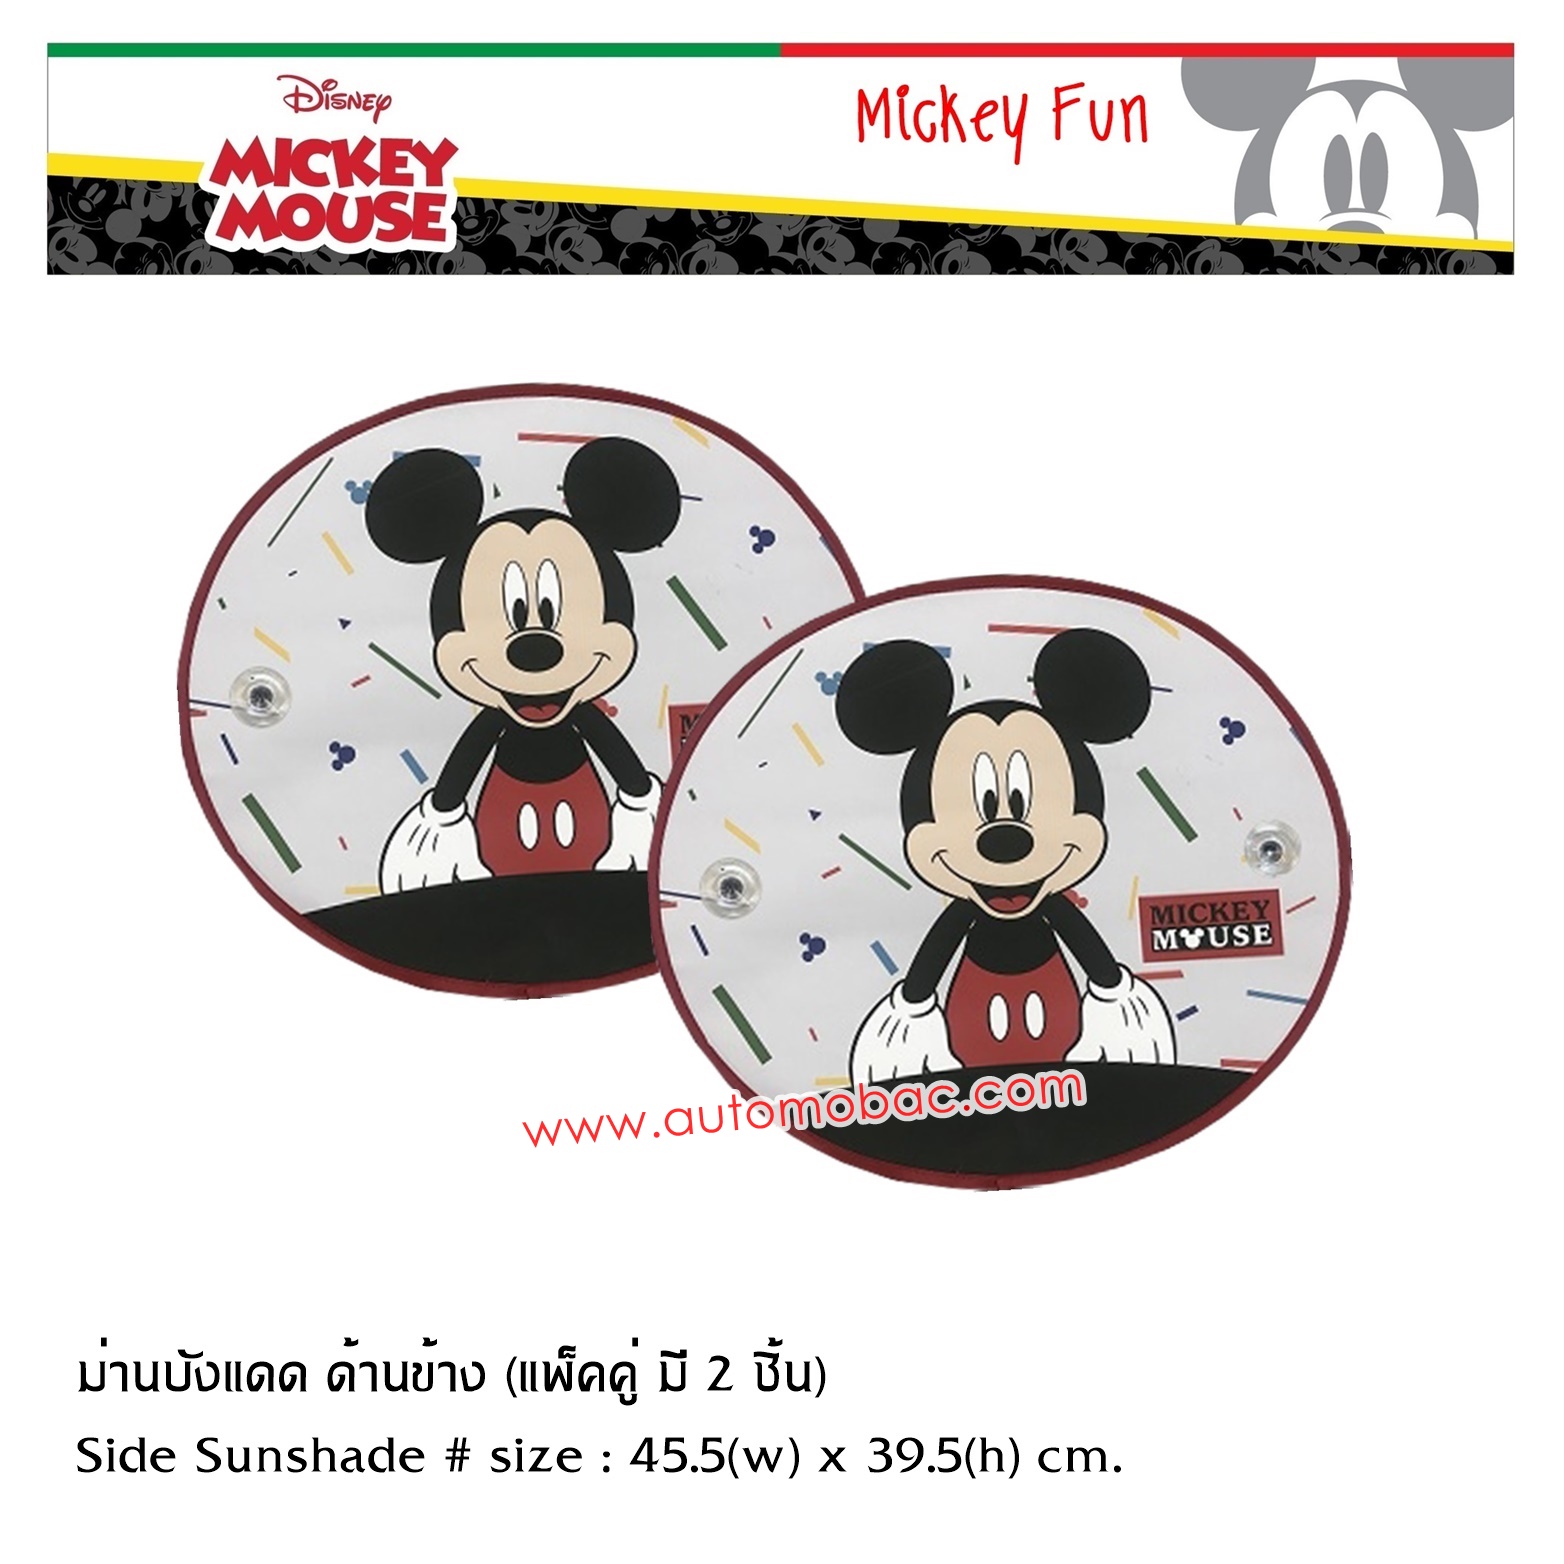 Mickey Mouse FUN ม่านบังแดด ด้านข้าง แพ็คคู่ 2 ชิ้น ป้องกัน UV และความร้อน ลิขสิทธิ์แท้